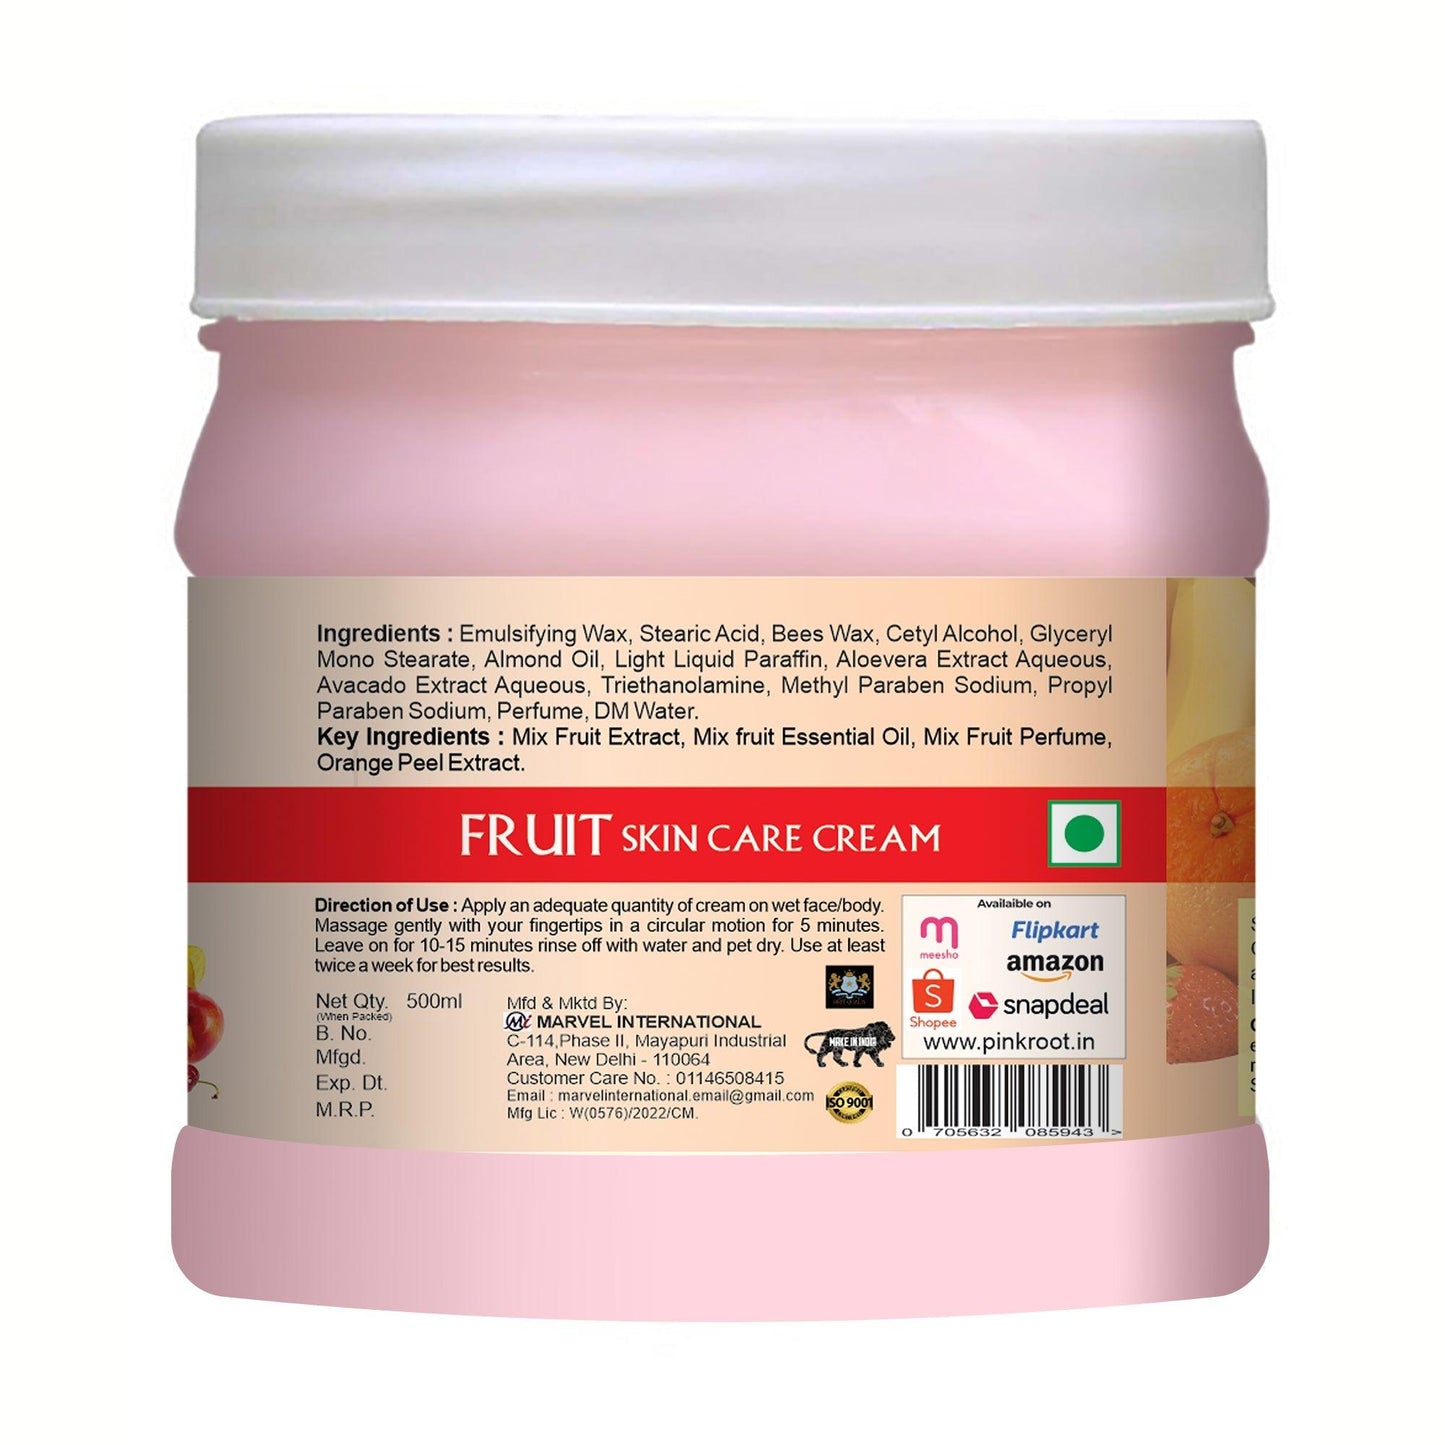 Fruit Cream 500ml - Pink Root